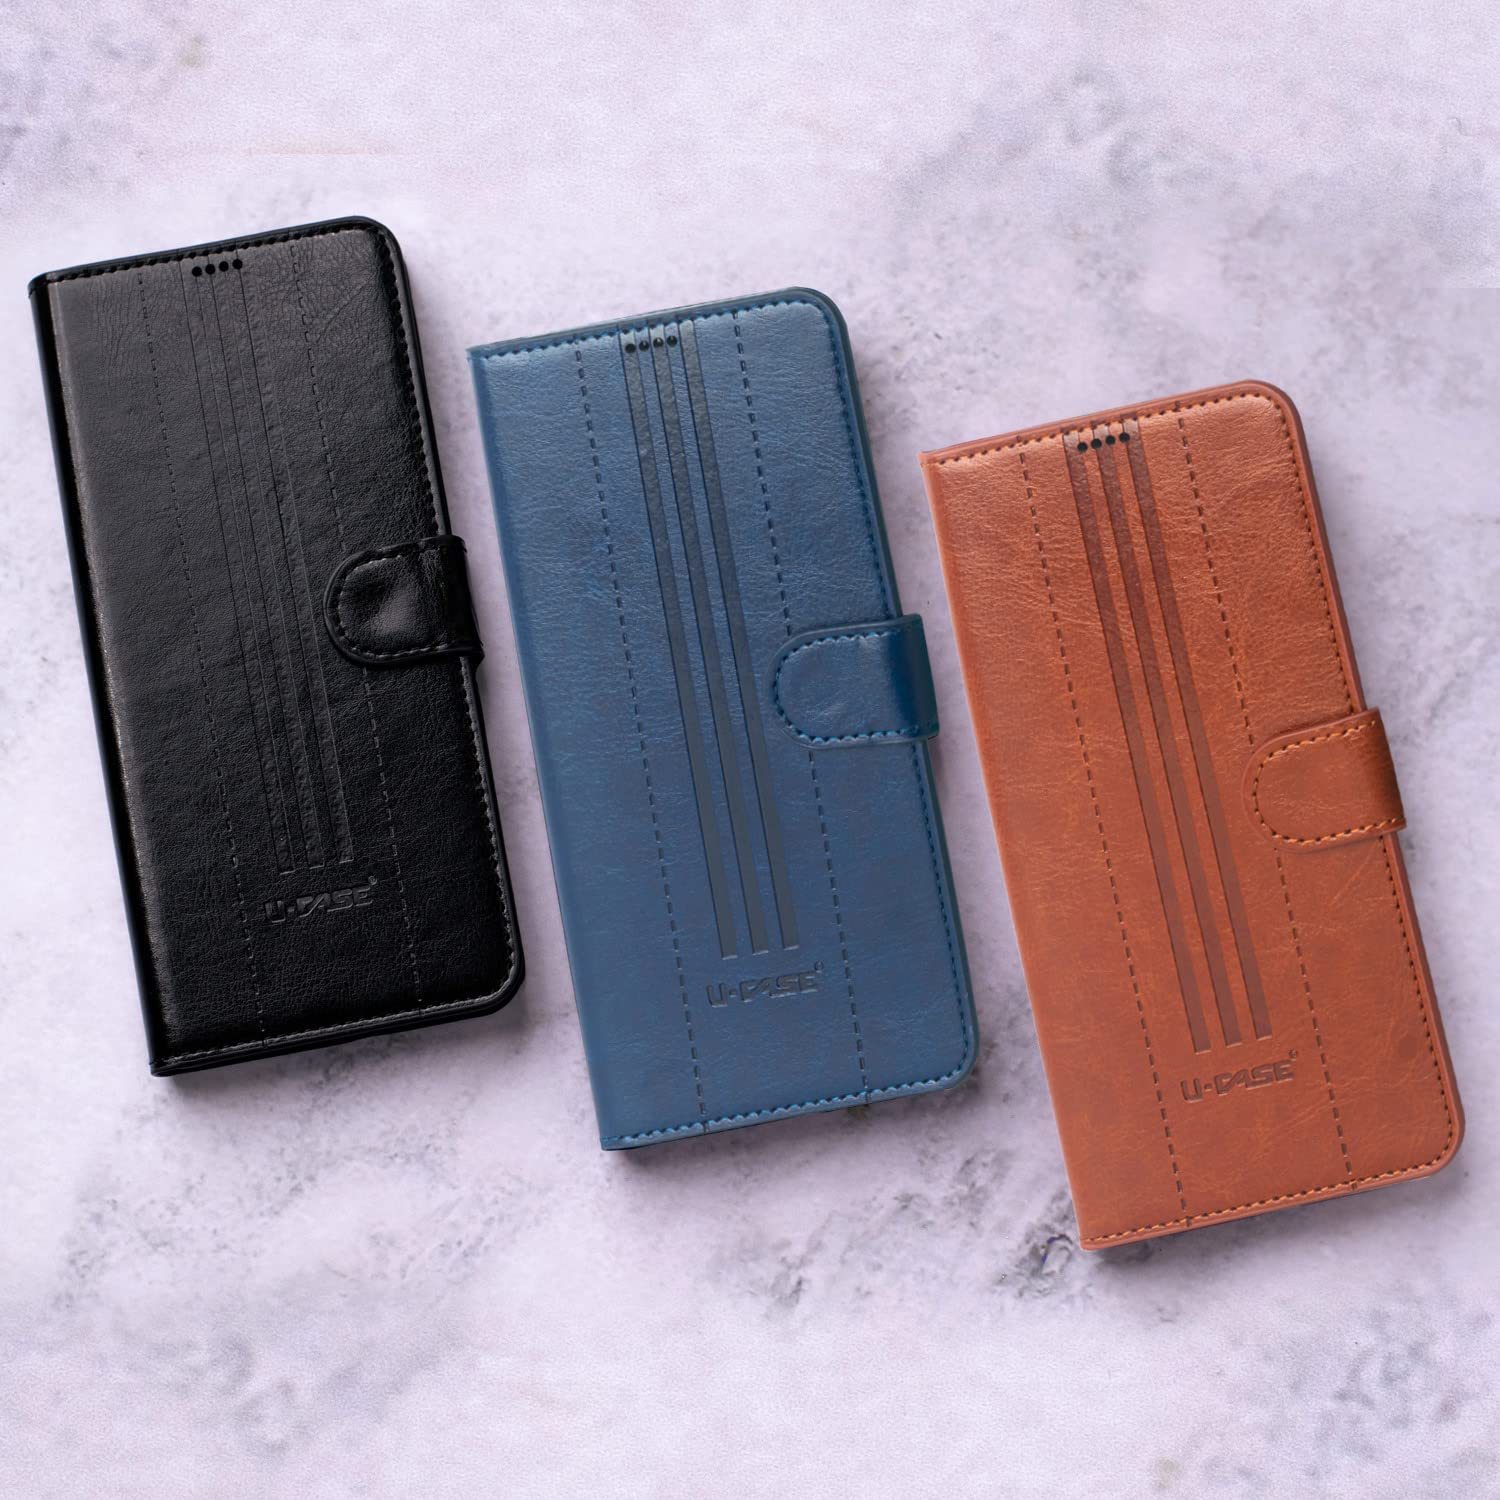 U-CASE Flip Cover for Vivo T1 Pro Vegan Foldable Stand & Pocket Magnetic Closure colors